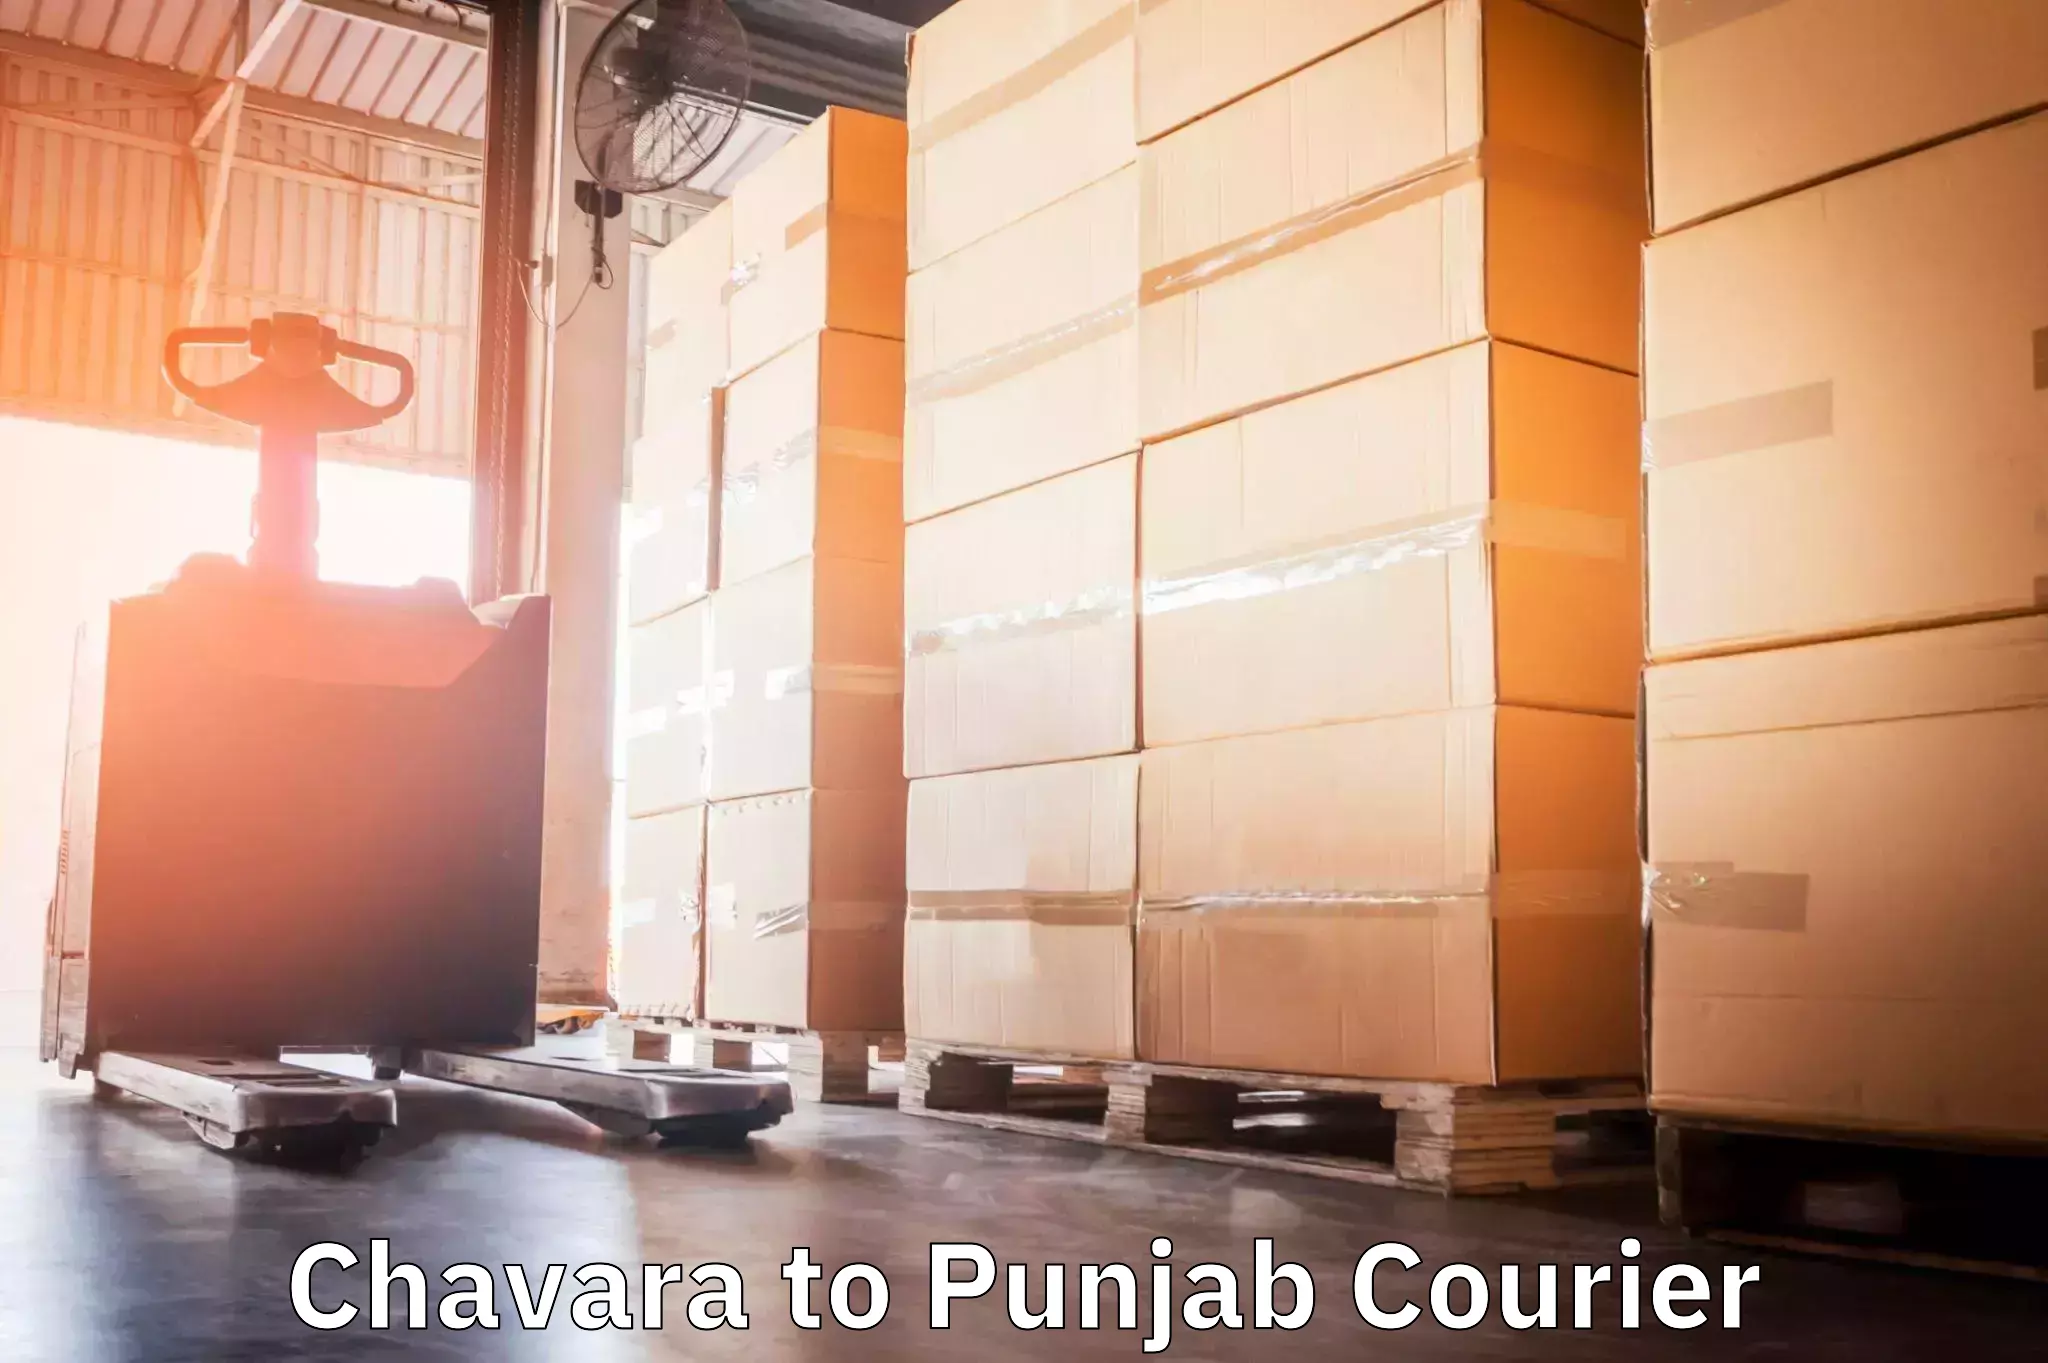 Courier service comparison Chavara to Bhadaur